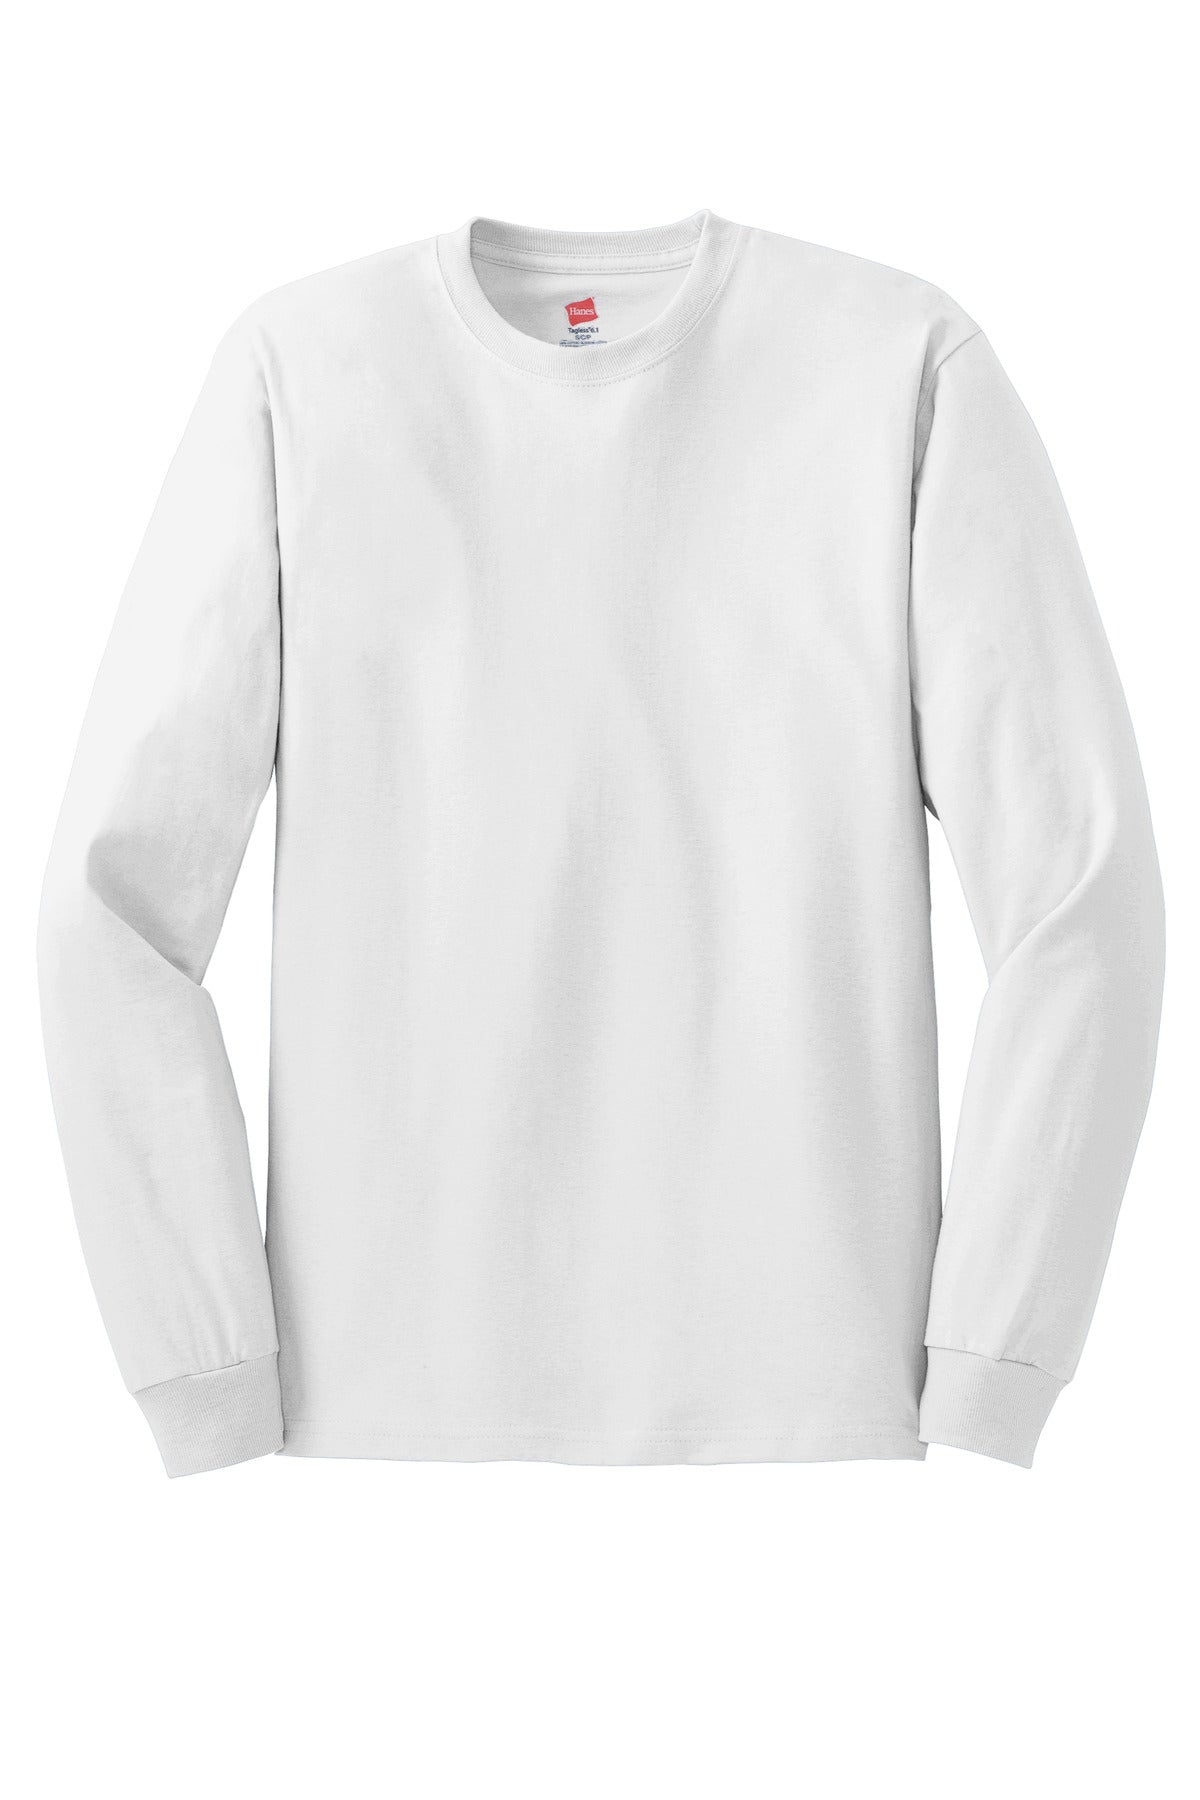 Hanes - Authentic 100% Cotton Long Sleeve T-Shirt. 5586